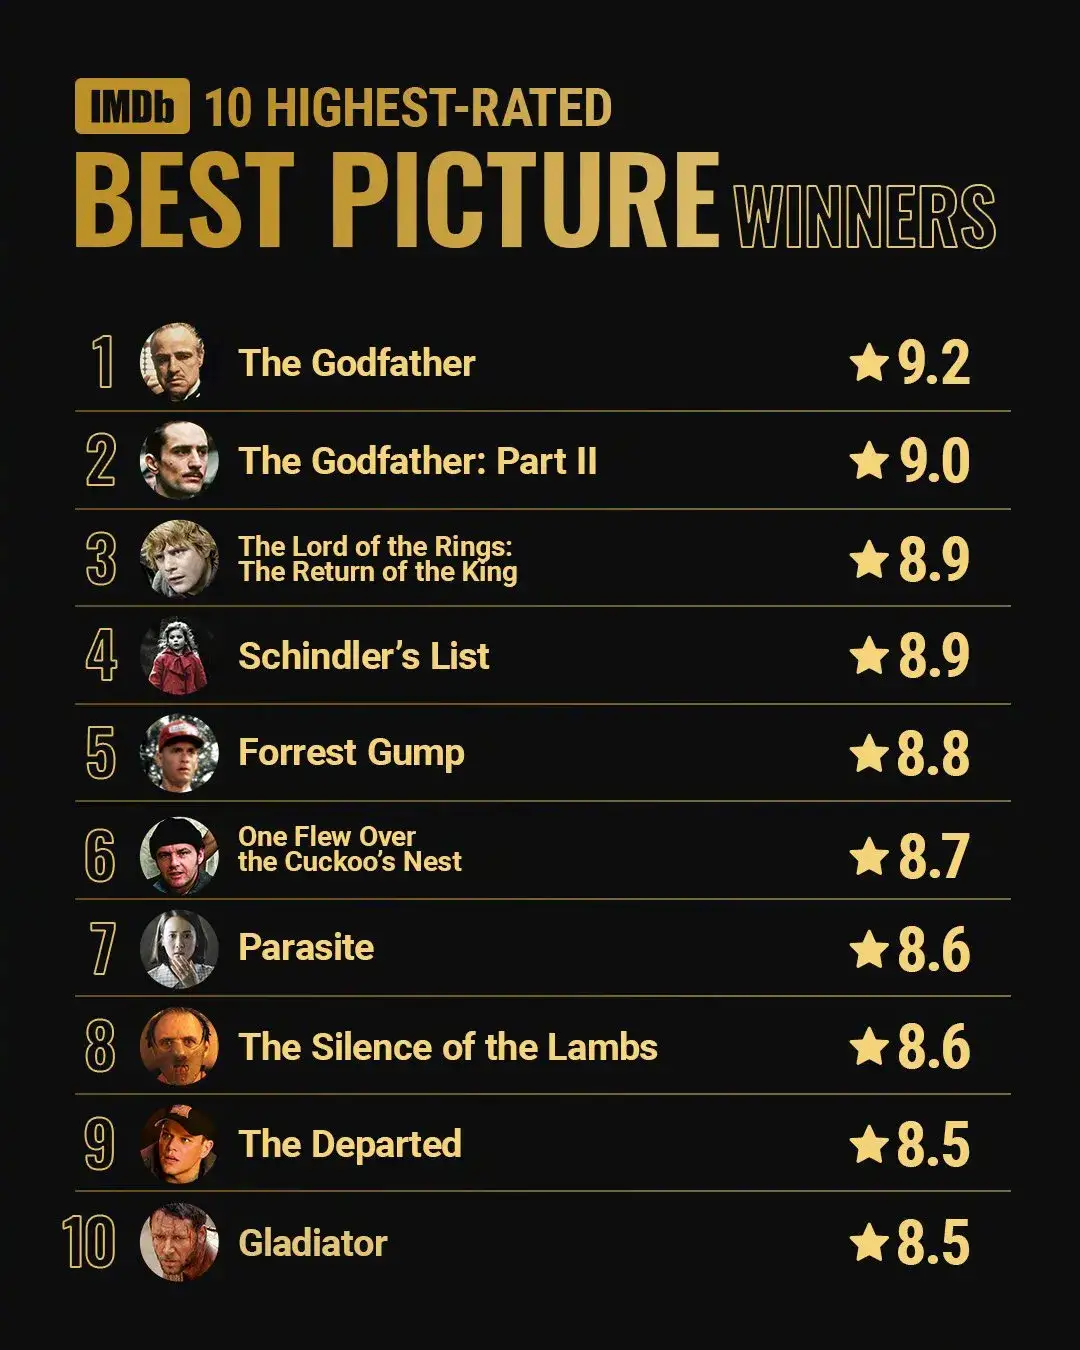 IMDB公布目前为止评分最高的十部奥斯卡最佳影片获奖电影名单，